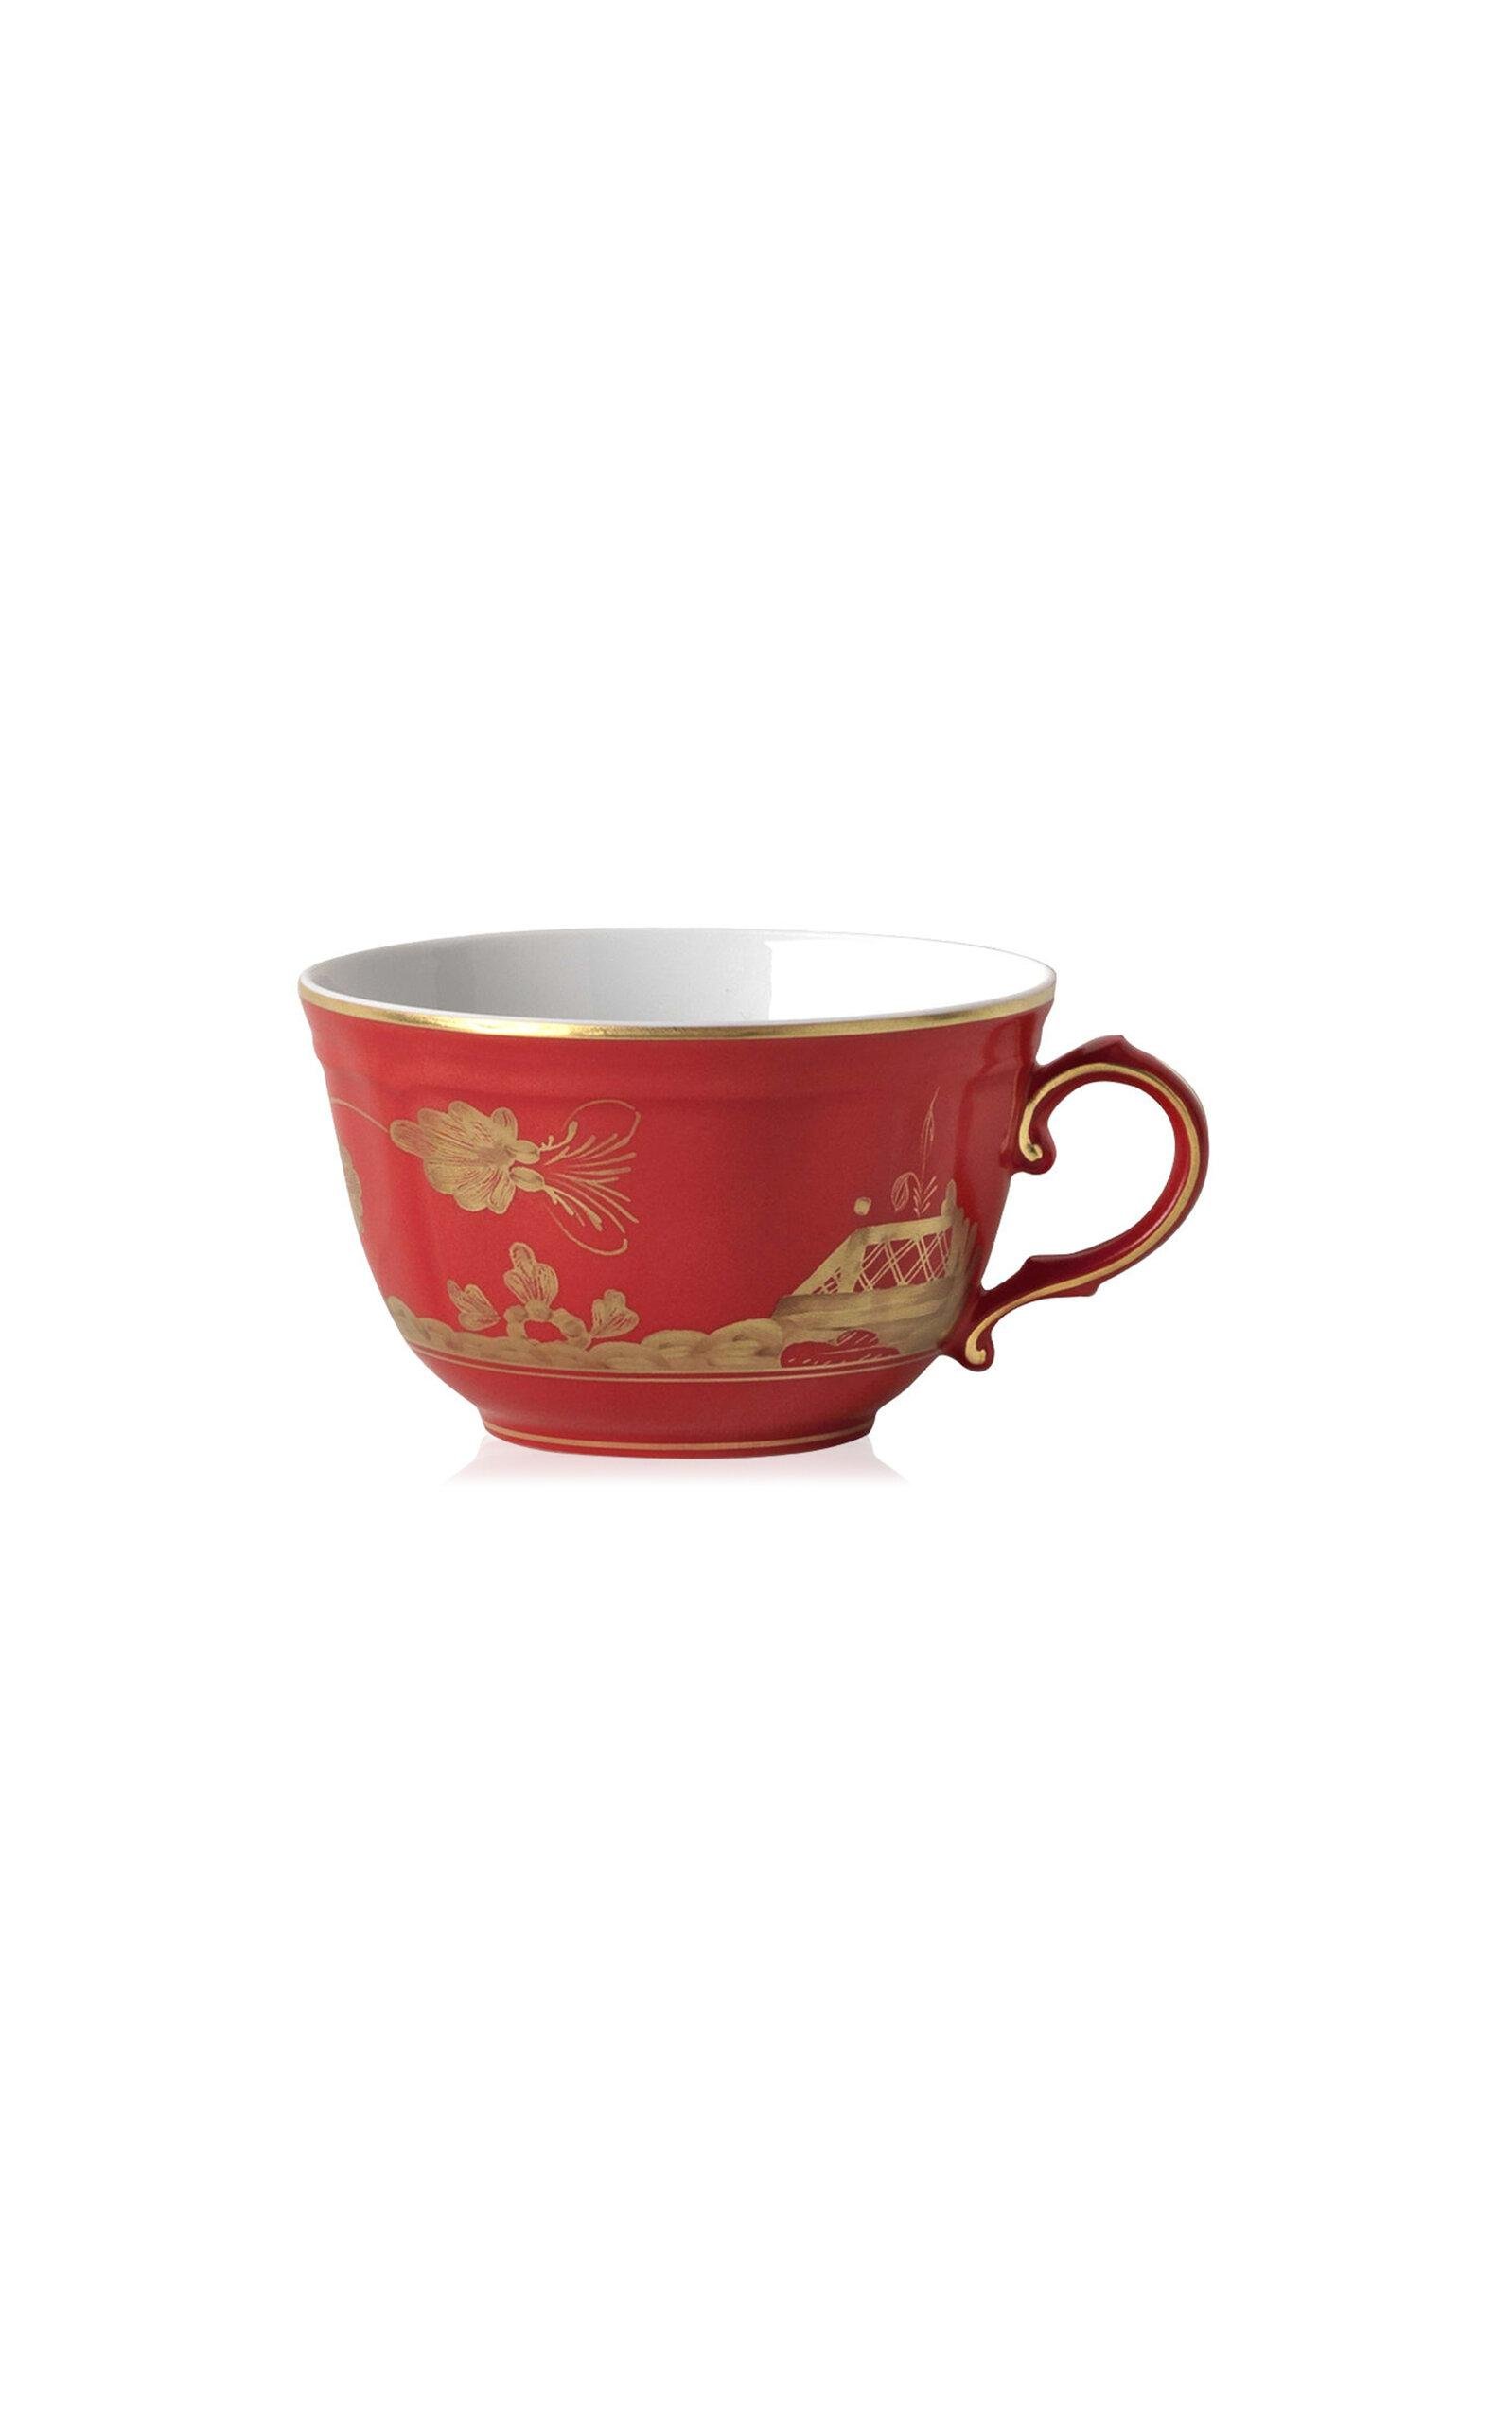 Ginori 1735 - Antico Doccia Porcelain Tea Cup - Red - Moda Operandi by GINORI 1735